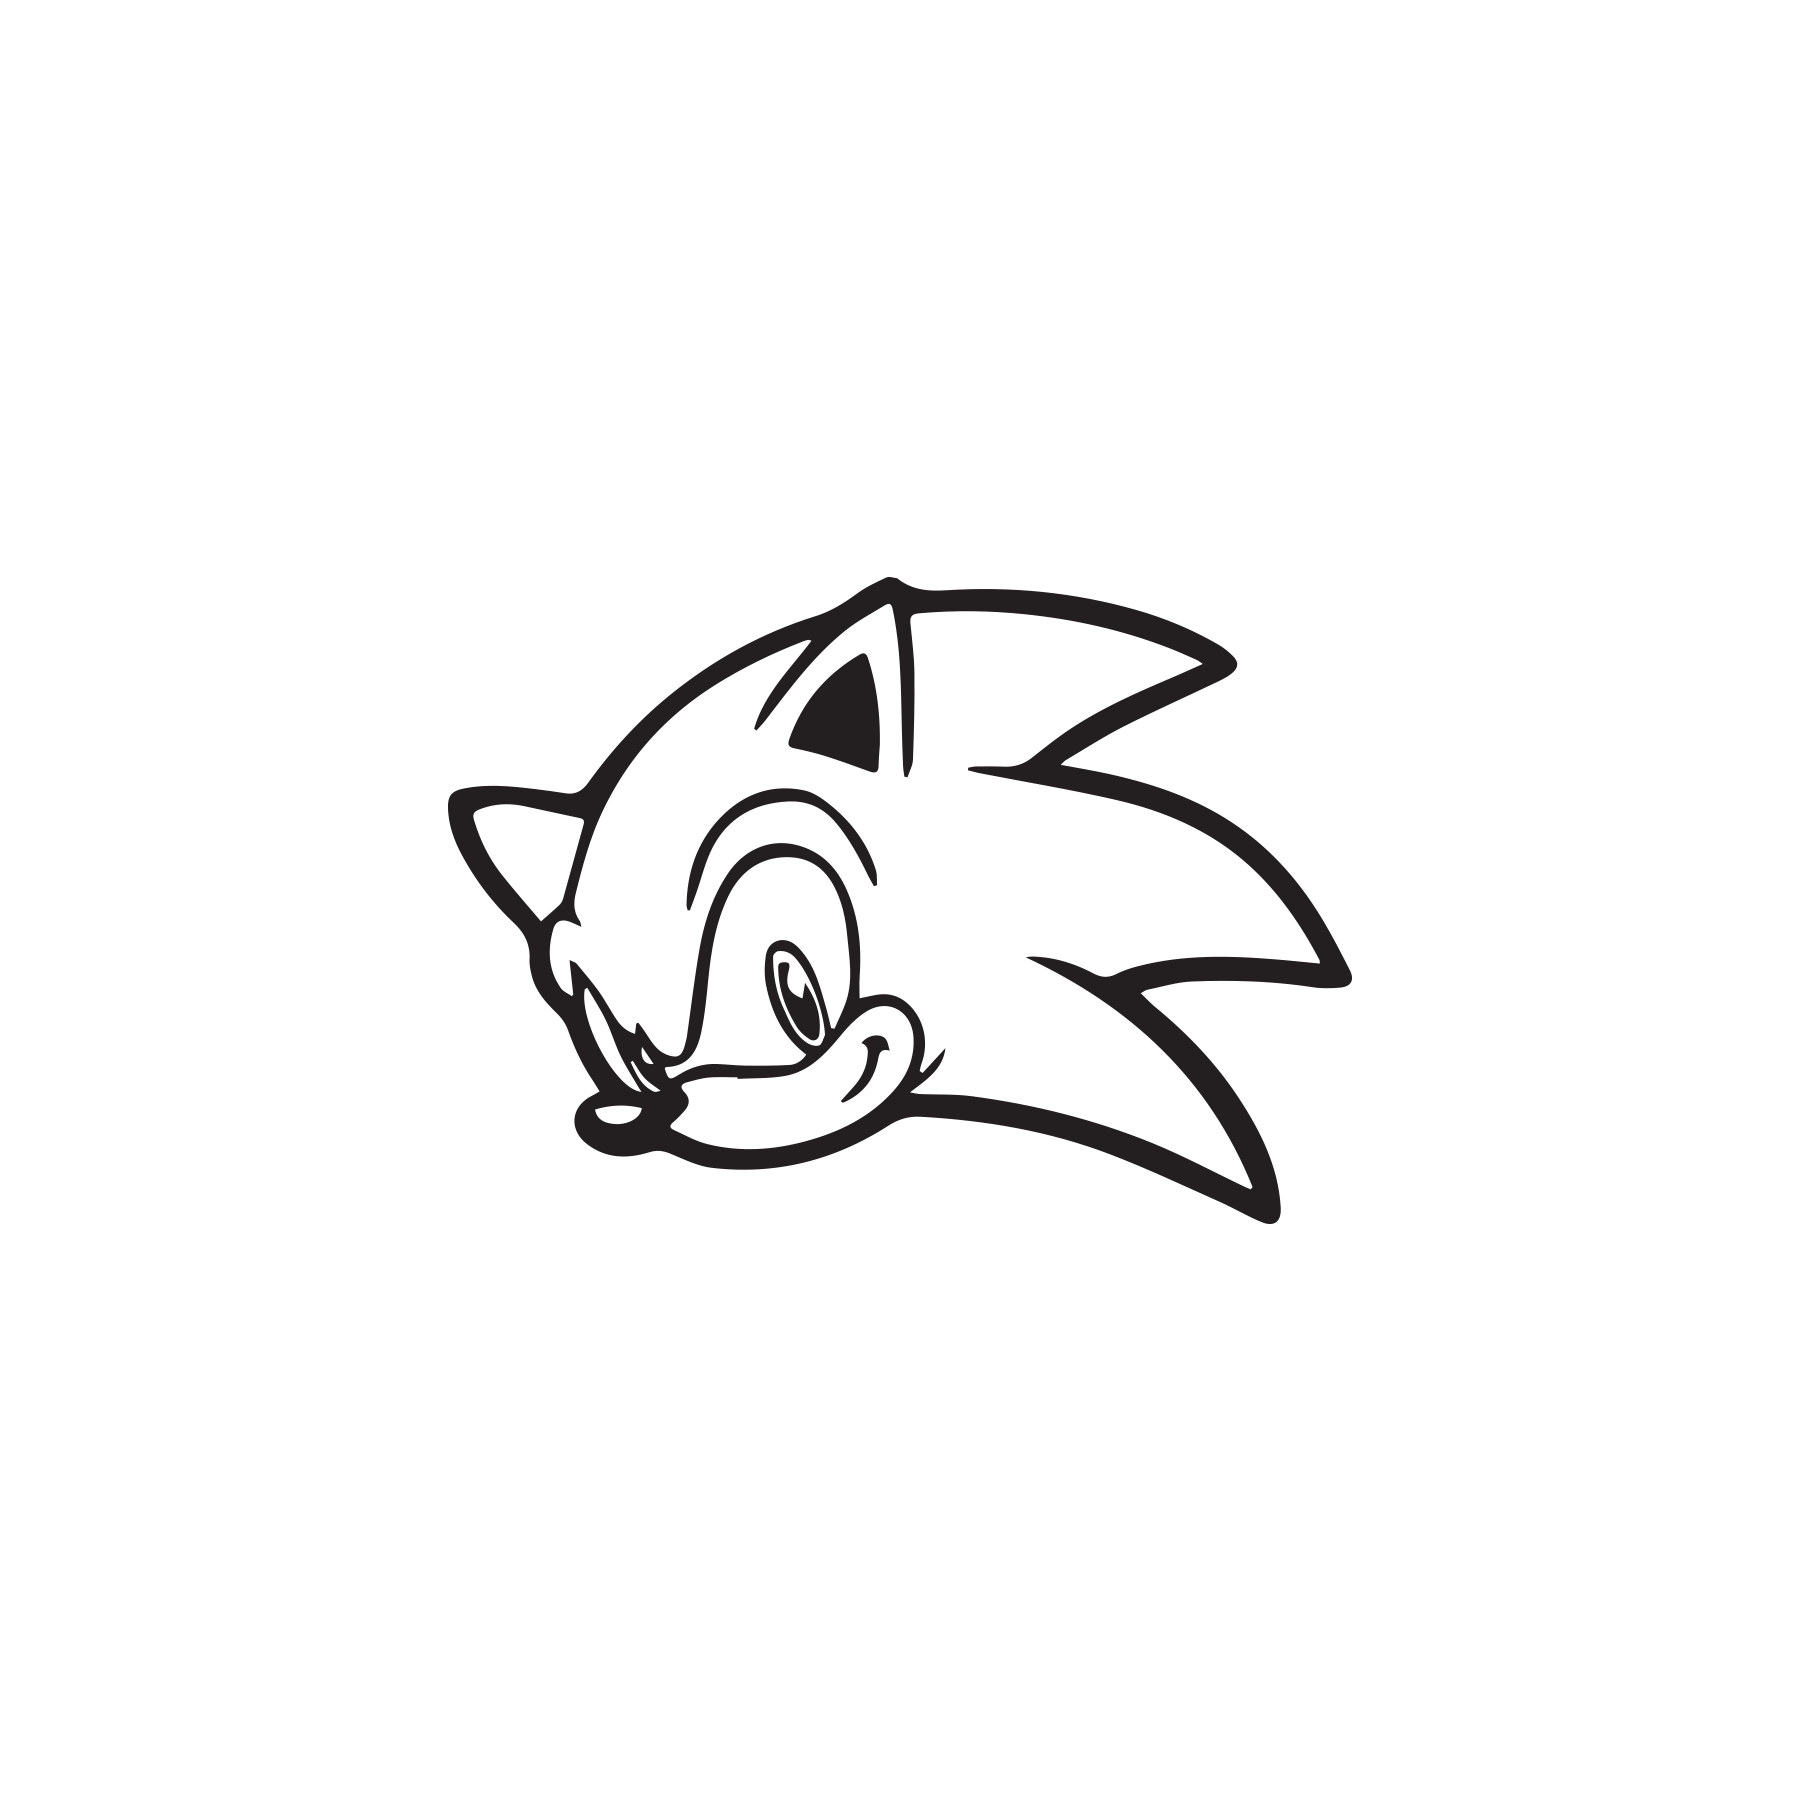 Sonic The Hedgehog Drawing by predator - DragoArt